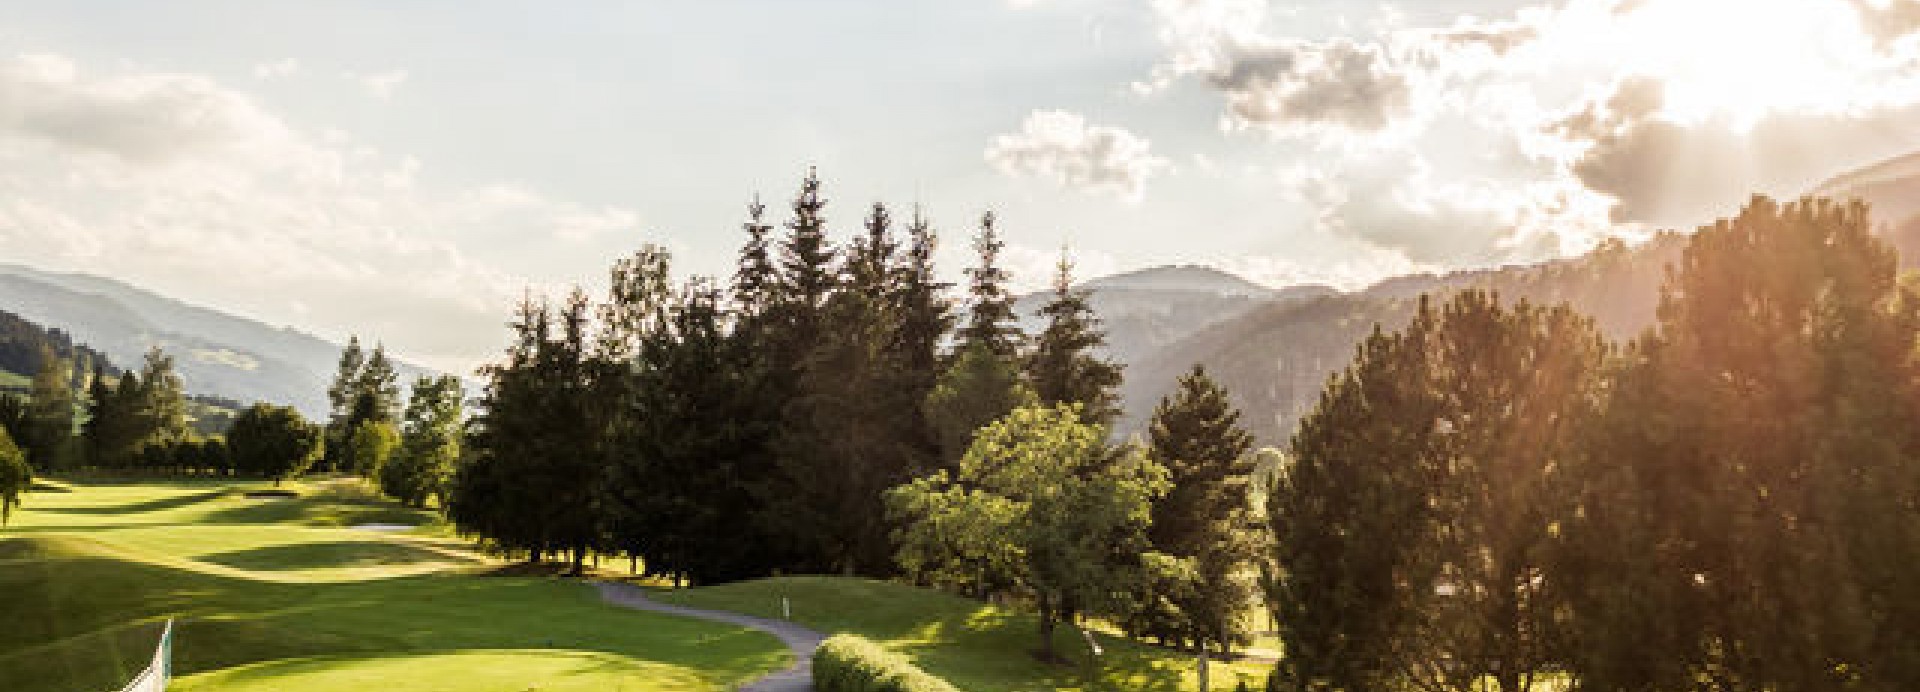 Dachstein Tauern Golf & Country Club  | Golfové zájezdy, golfová dovolená, luxusní golf